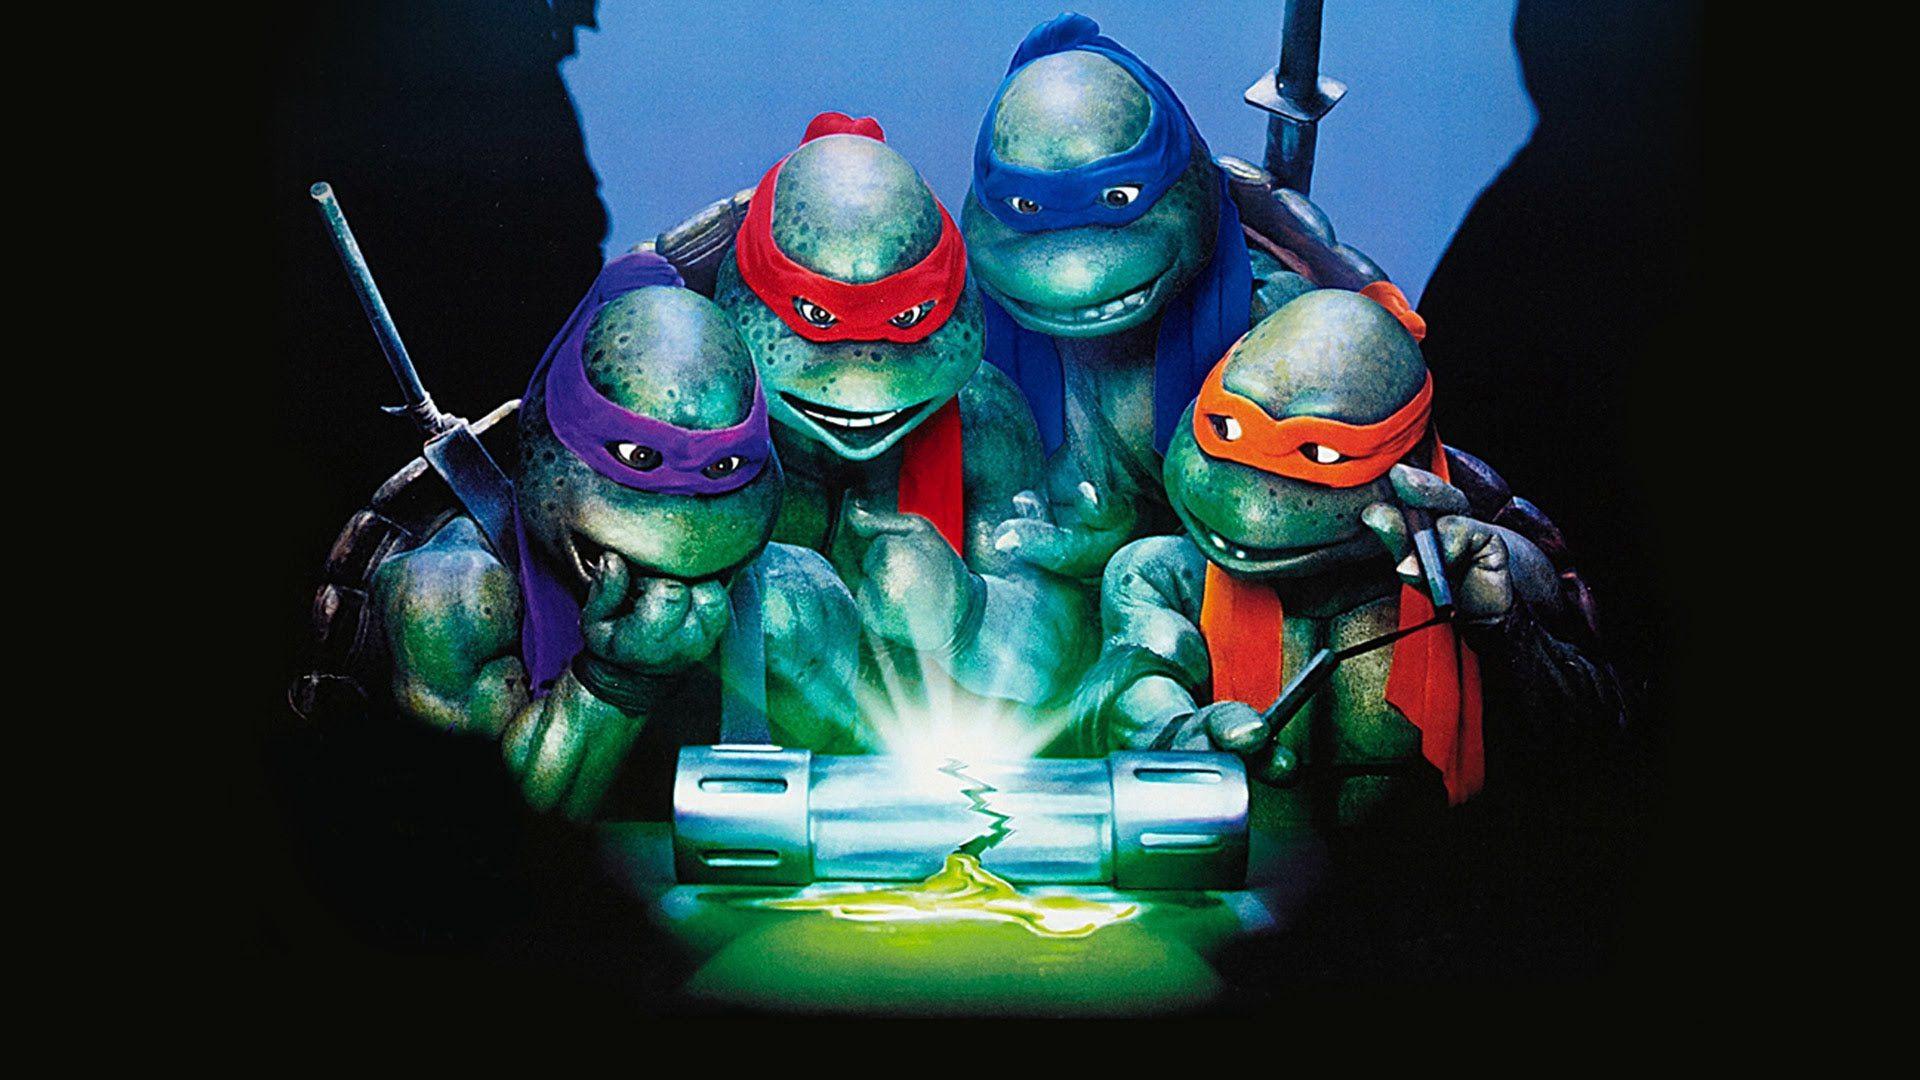 1920x1080 Teenage Mutant Ninja Turtles II (1991) Đánh giá phim - Yêu cái này